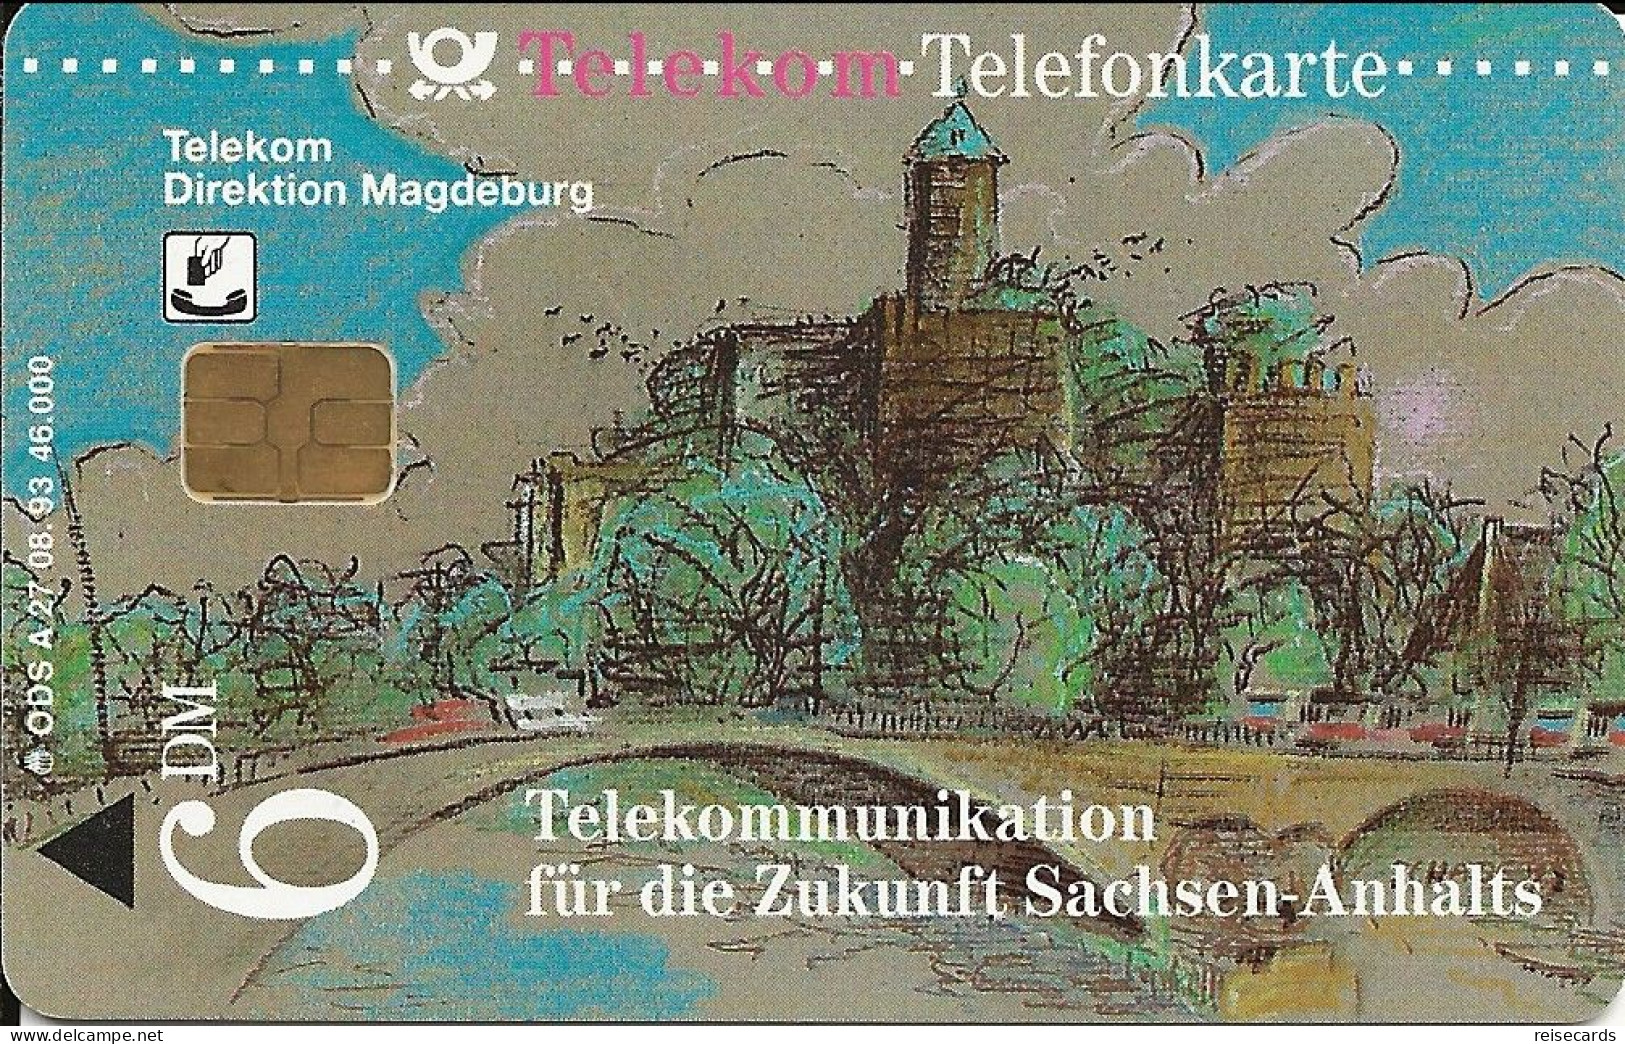 Germany: Telekom A 27 08.93 Telekommunikation Für Die Zukunft Sachsen-Anhalts - A + AD-Series : D. Telekom AG Advertisement